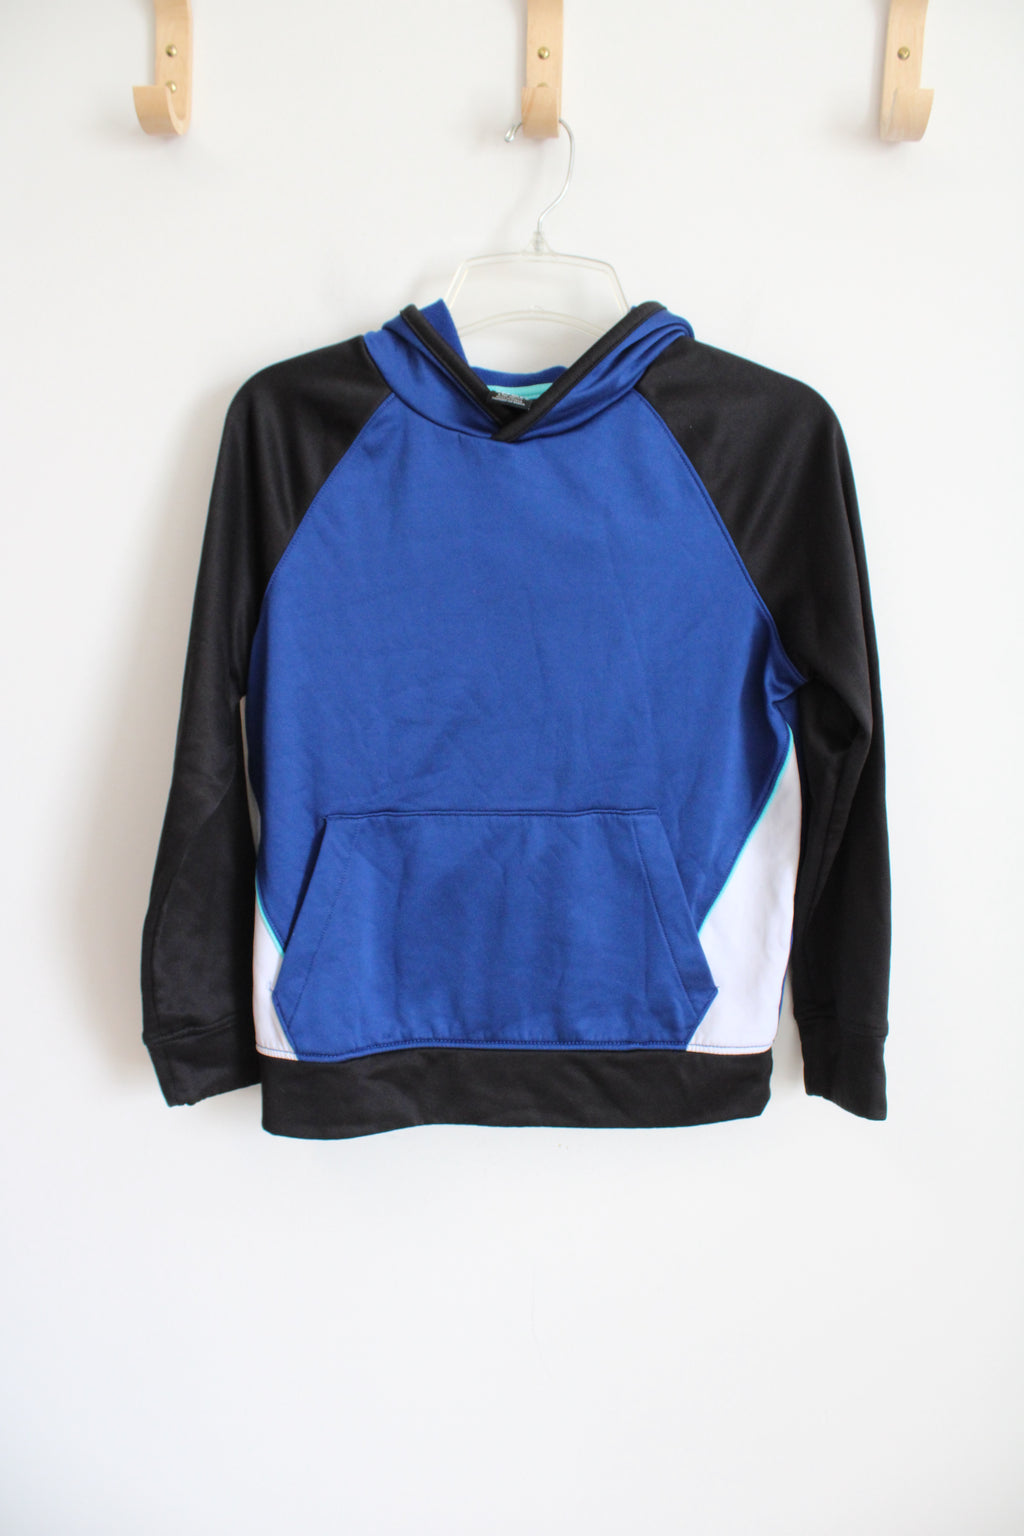 Children's Place Sport Cobalt Blue Fleece Lined Hoodie | Youth L (10/12)